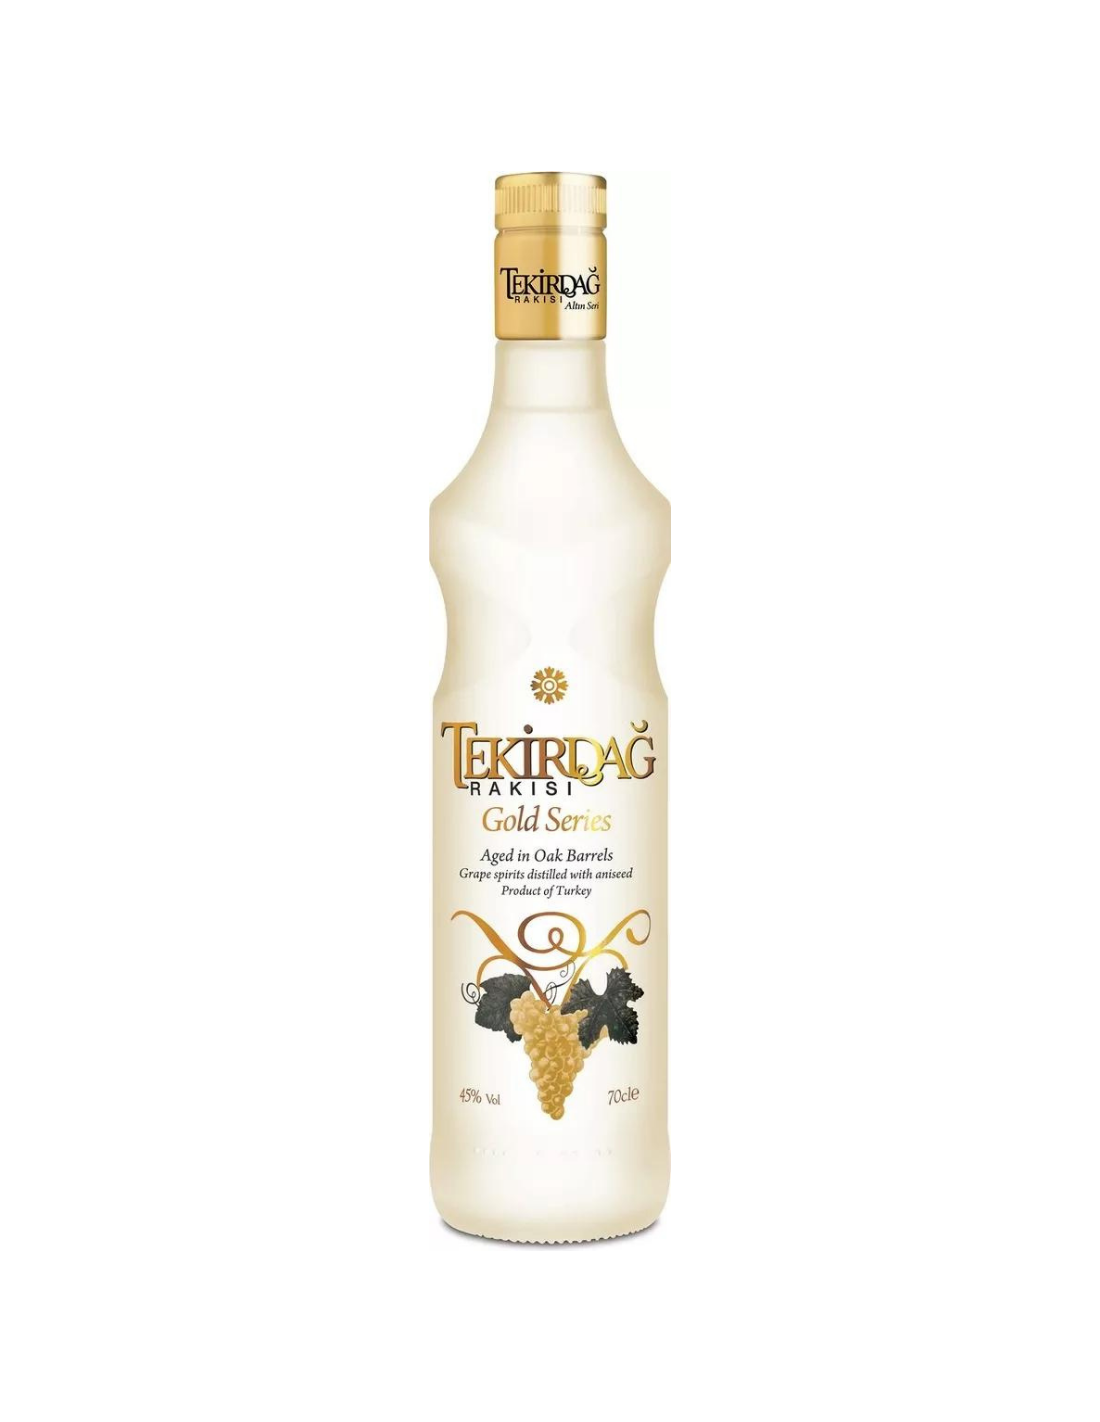 Bautura traditionala Tekirdag Rakisi Gold, 45% alc., 0.7L, Turcia alcooldiscount.ro